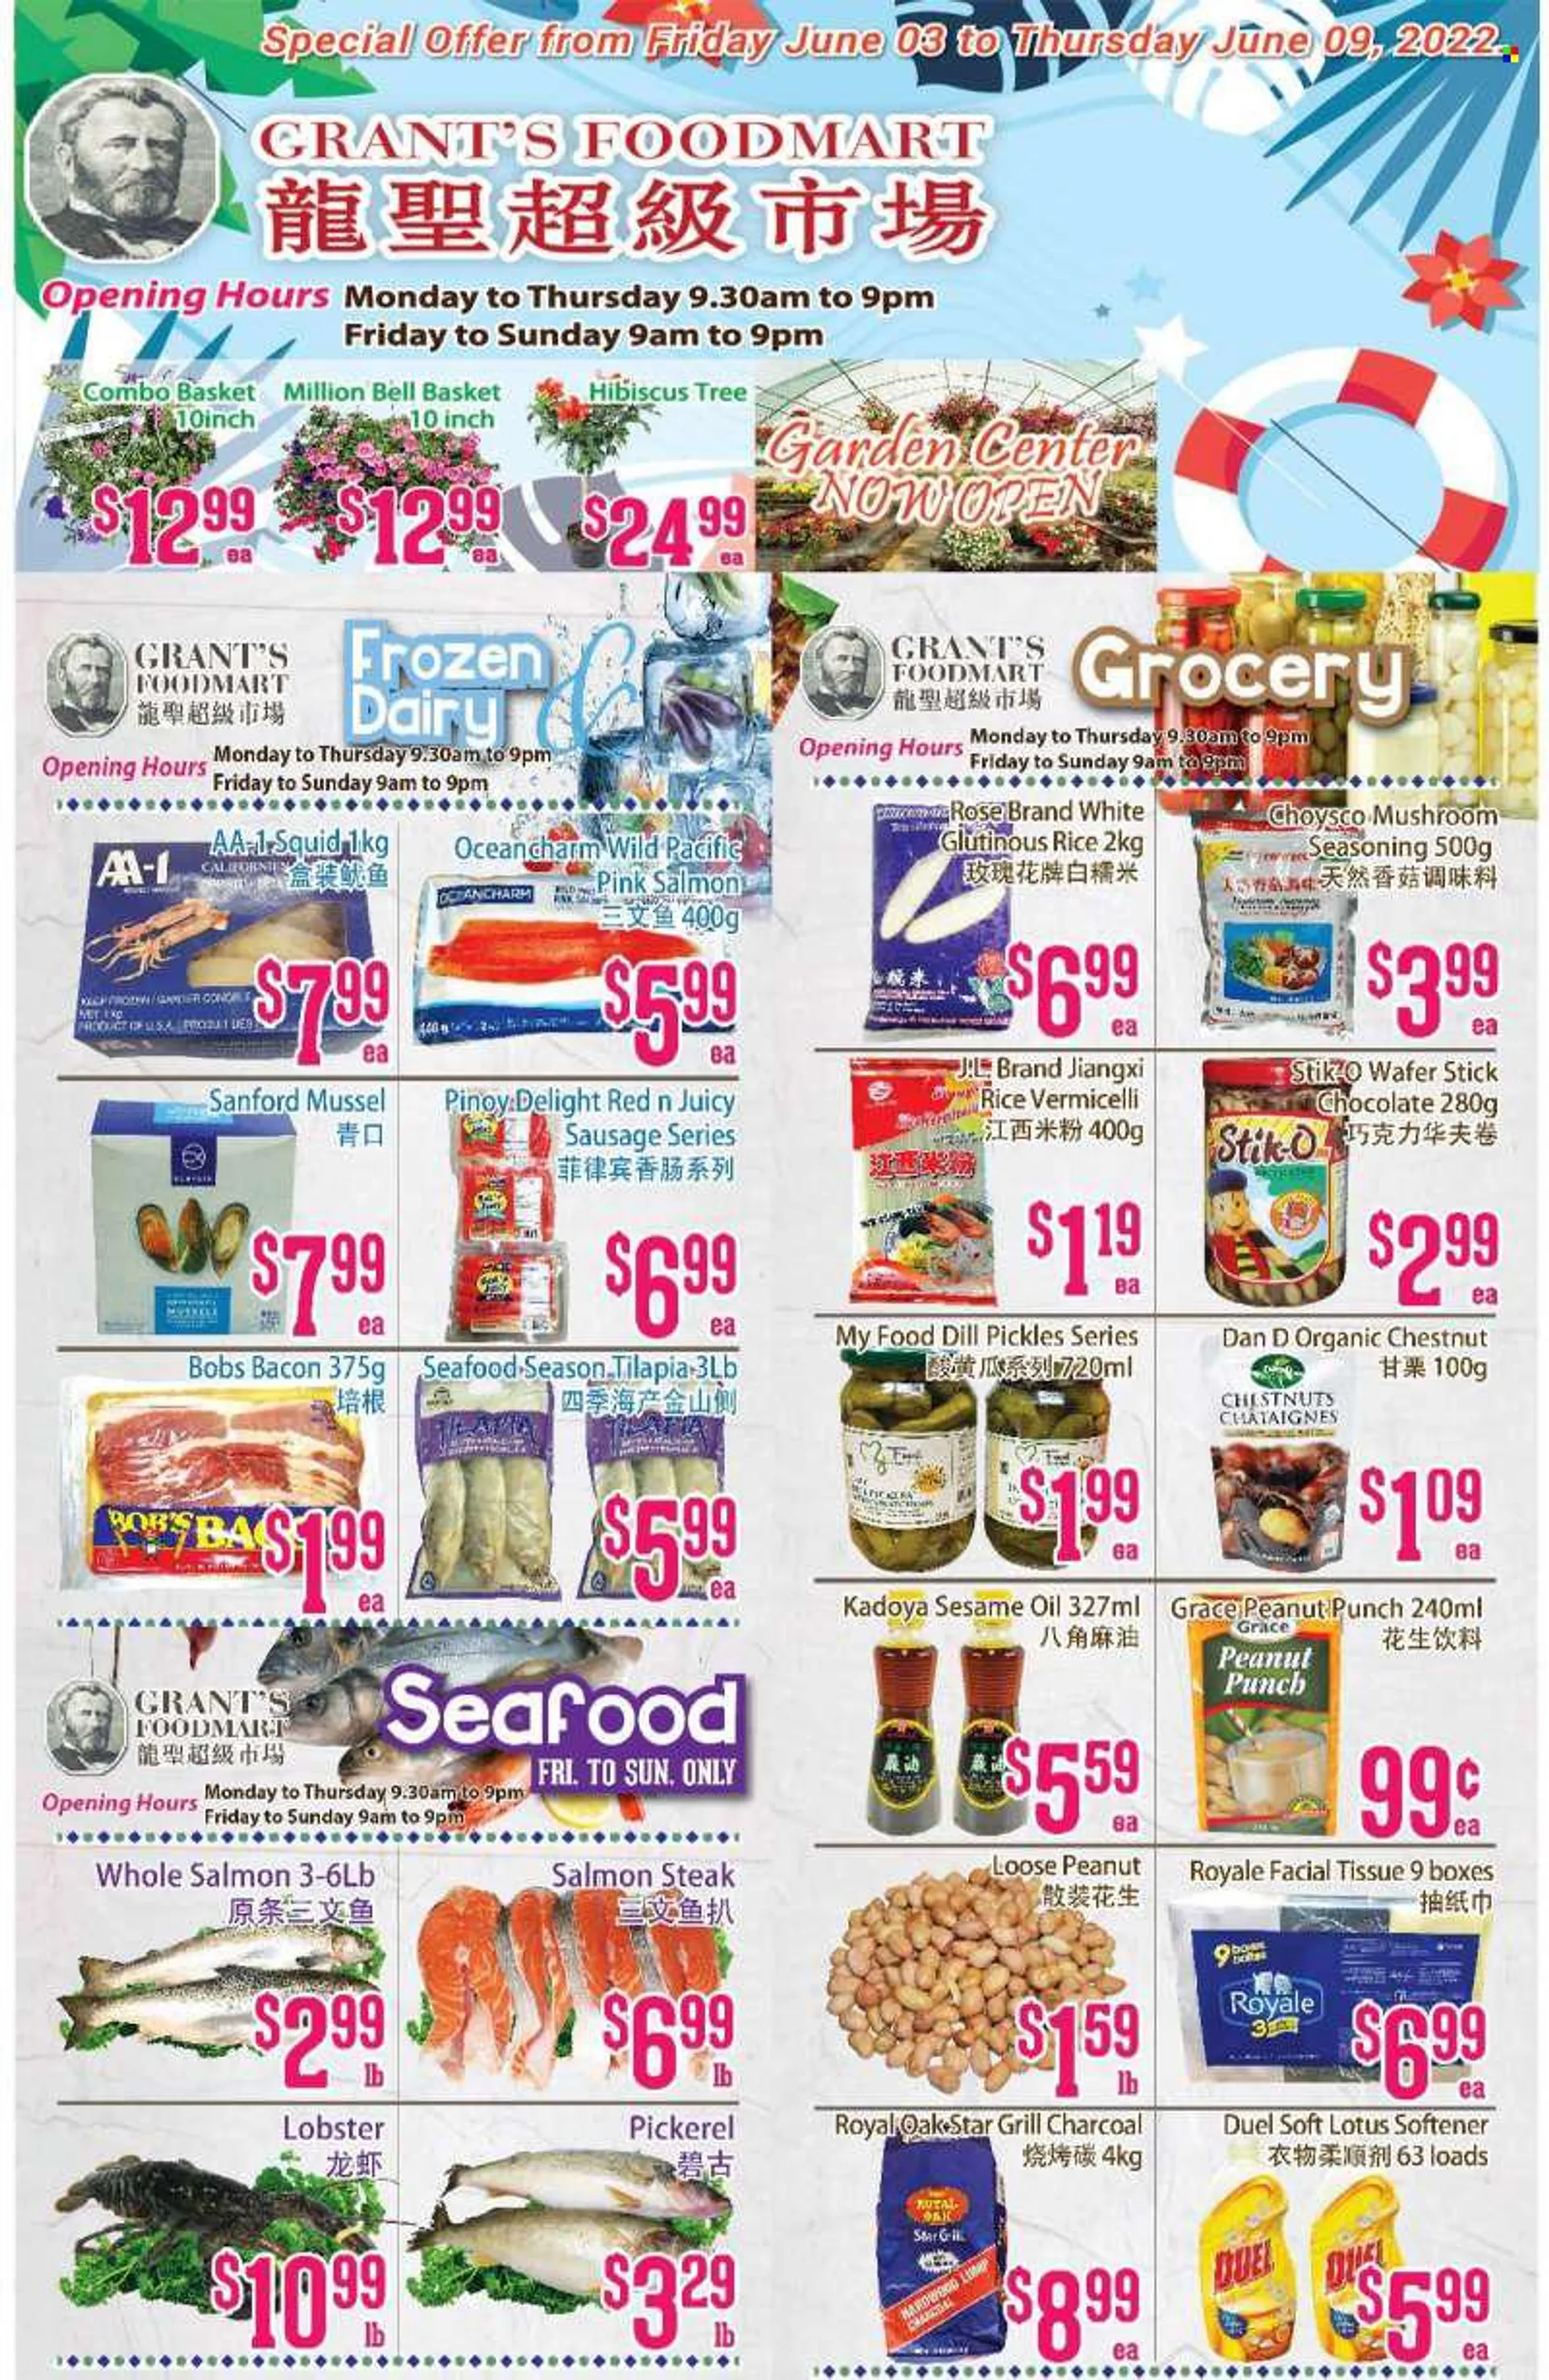 Grant's Foodmart Flyer - June 03, 2022 - June 09, 2022. from June 3 to June 9 2022 - flyer page 2